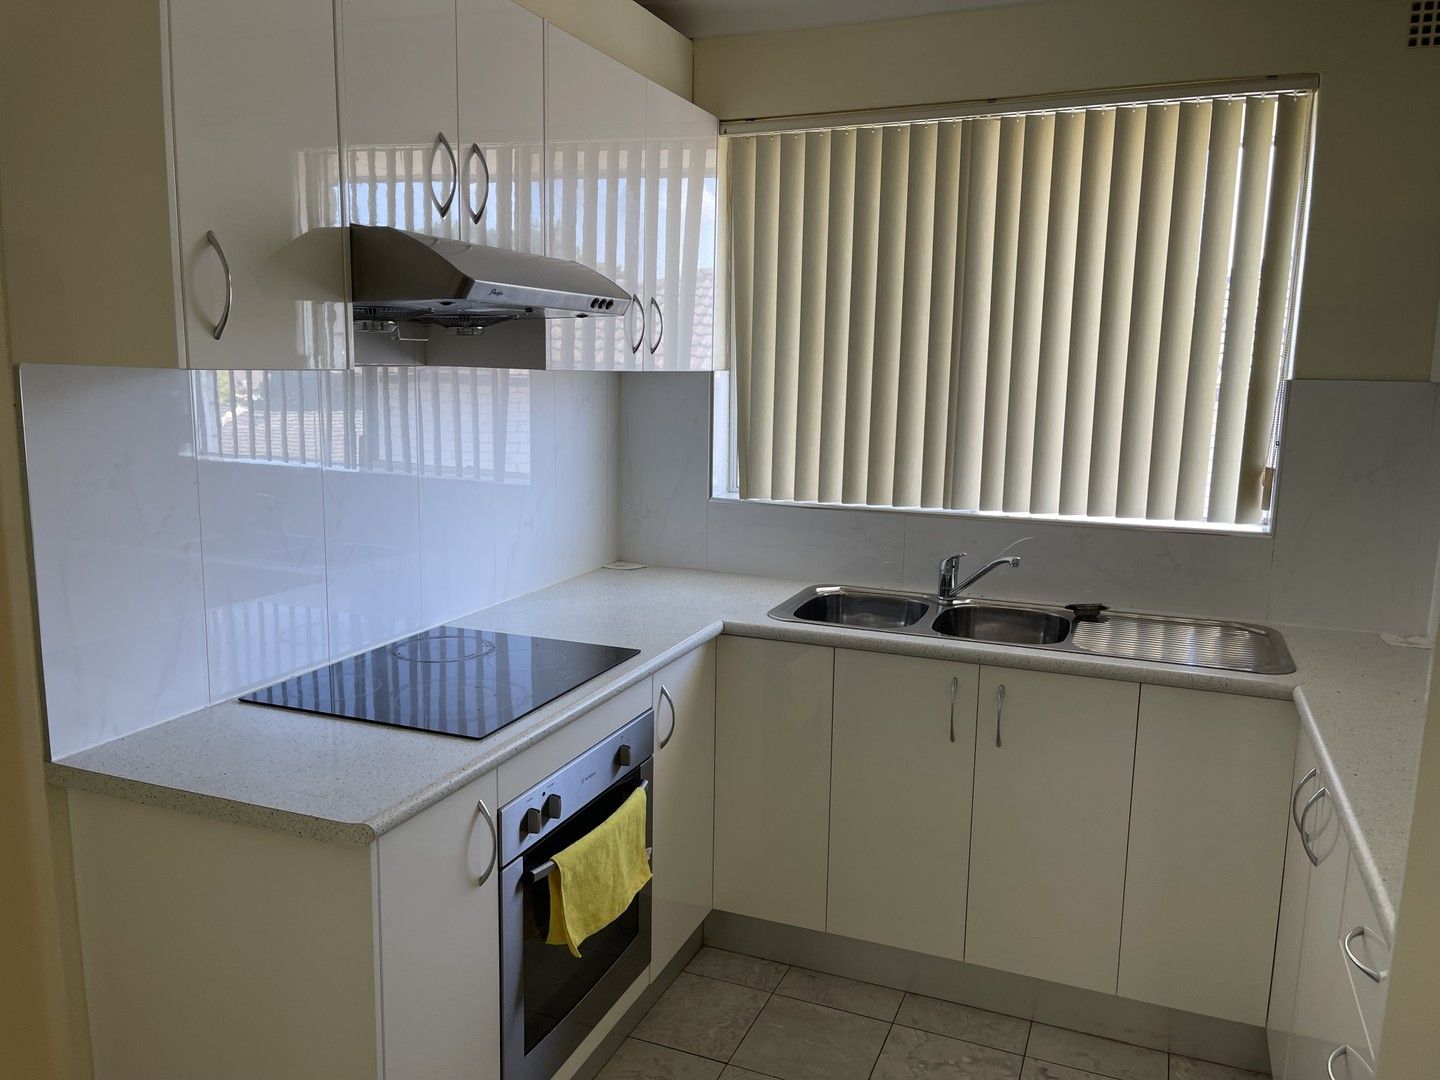 2 bedrooms House in 21/118 Longfield street CABRAMATTA WEST NSW, 2166